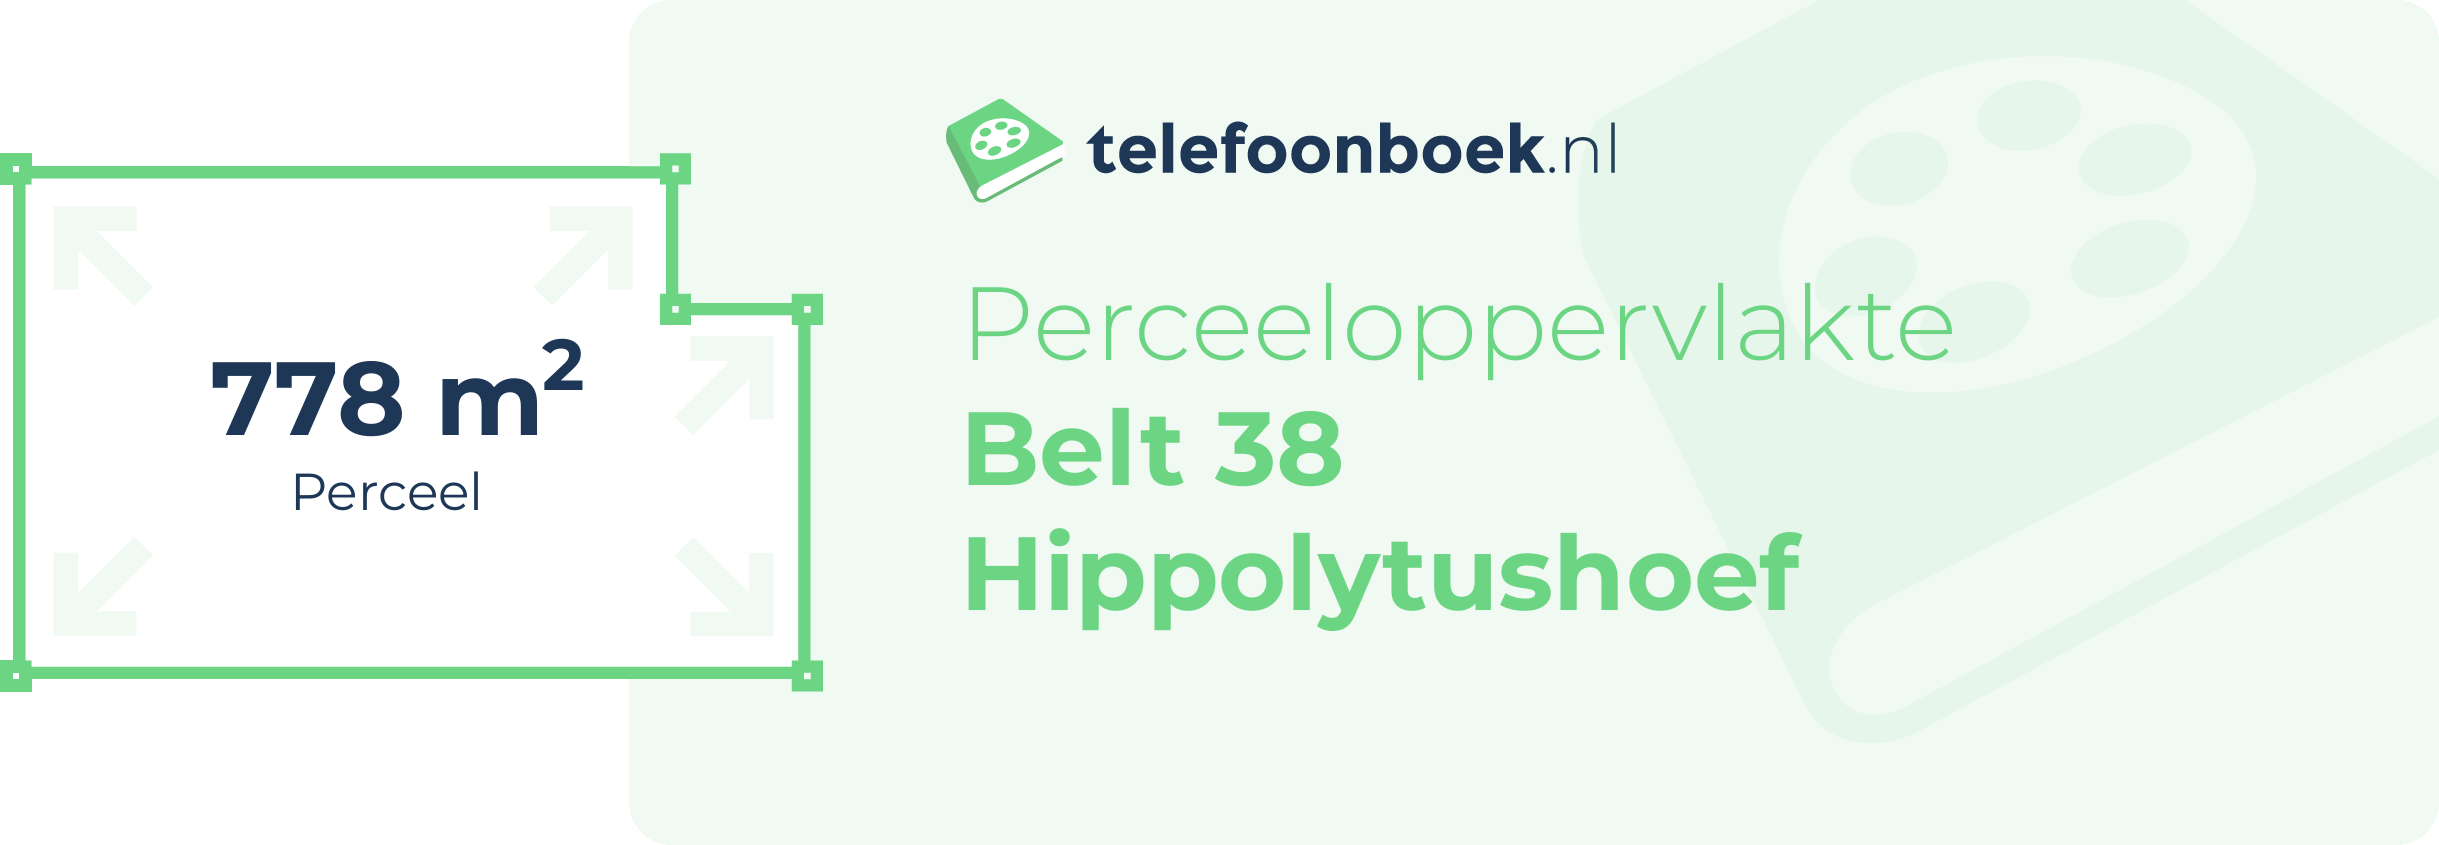 Perceeloppervlakte Belt 38 Hippolytushoef